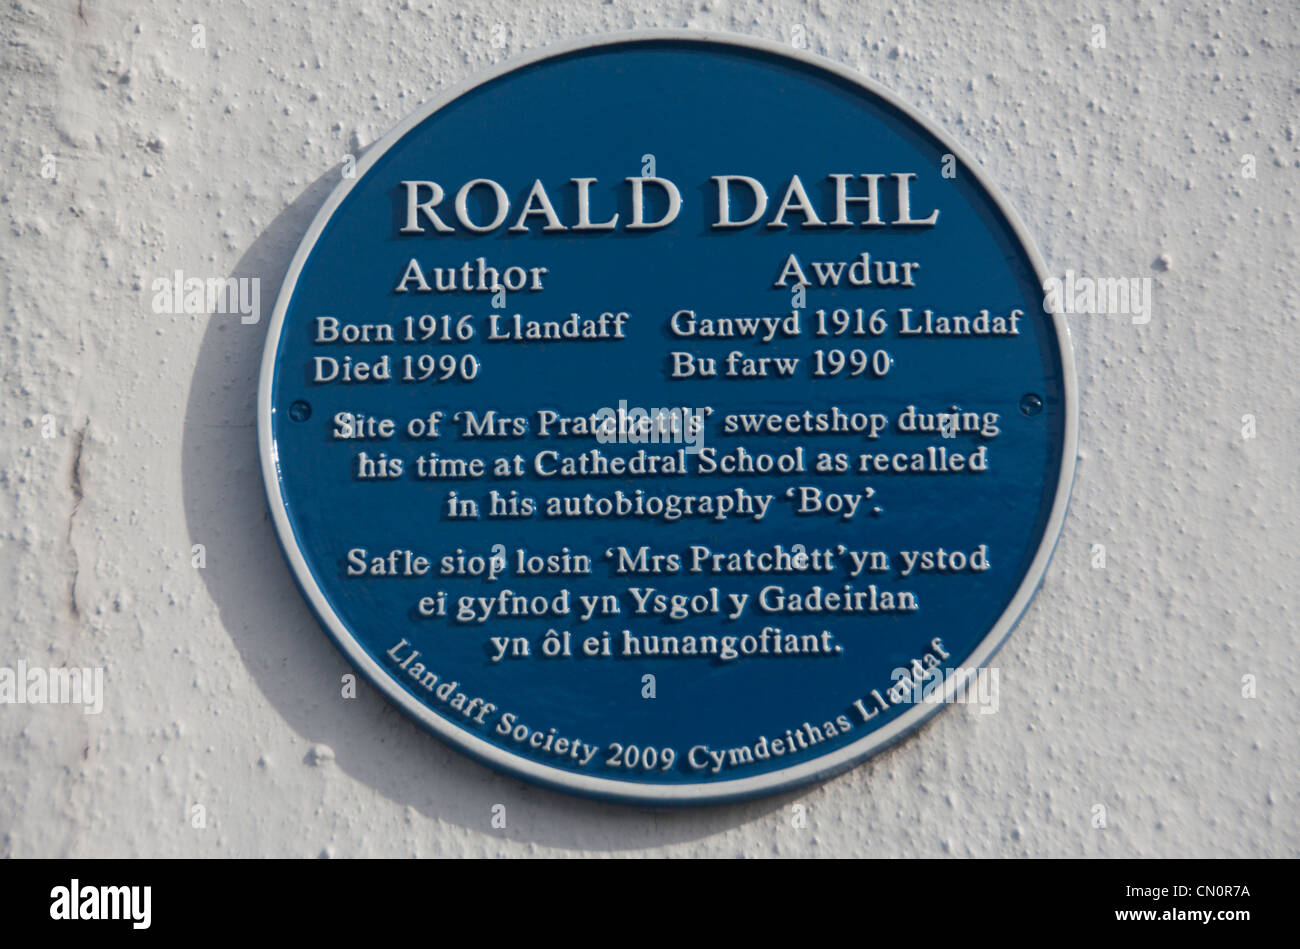 Roald Dahl targa blu sito di marcatura della signora Pratchett's sweetshop (dalla sua autobiografia "Boy') Llandaff Cardiff Wales UK Foto Stock